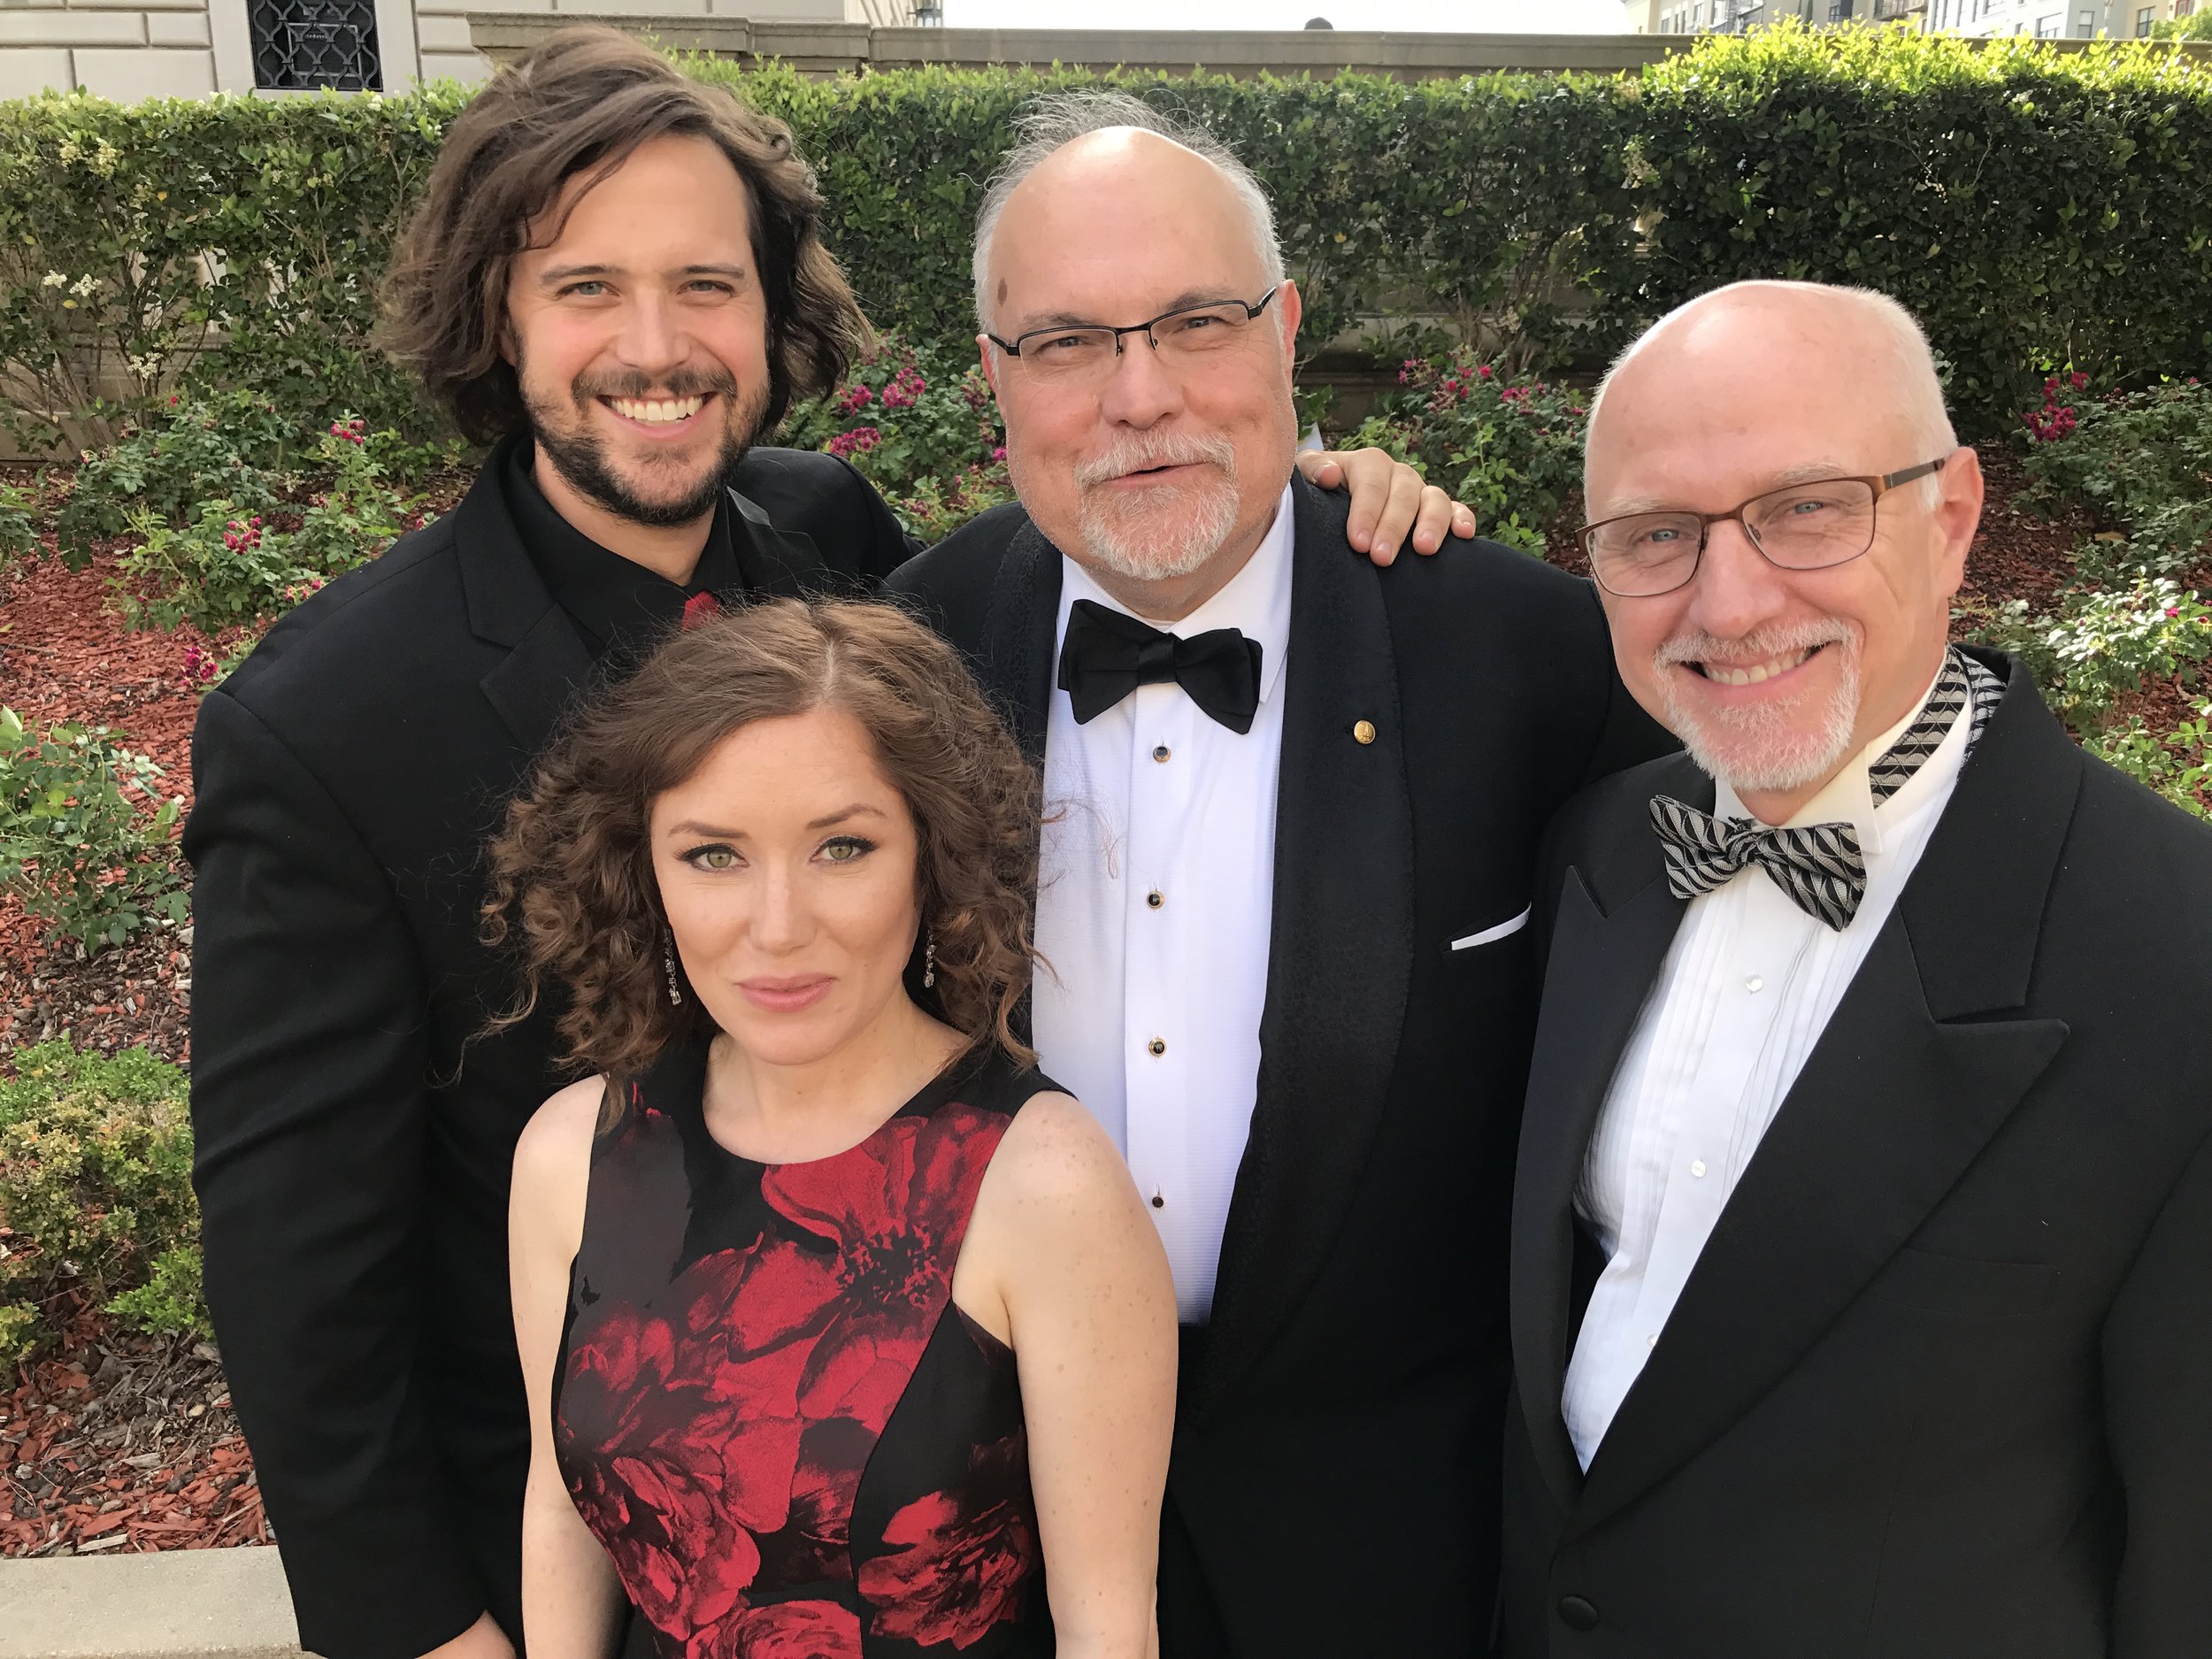 2017 Emmy Awards